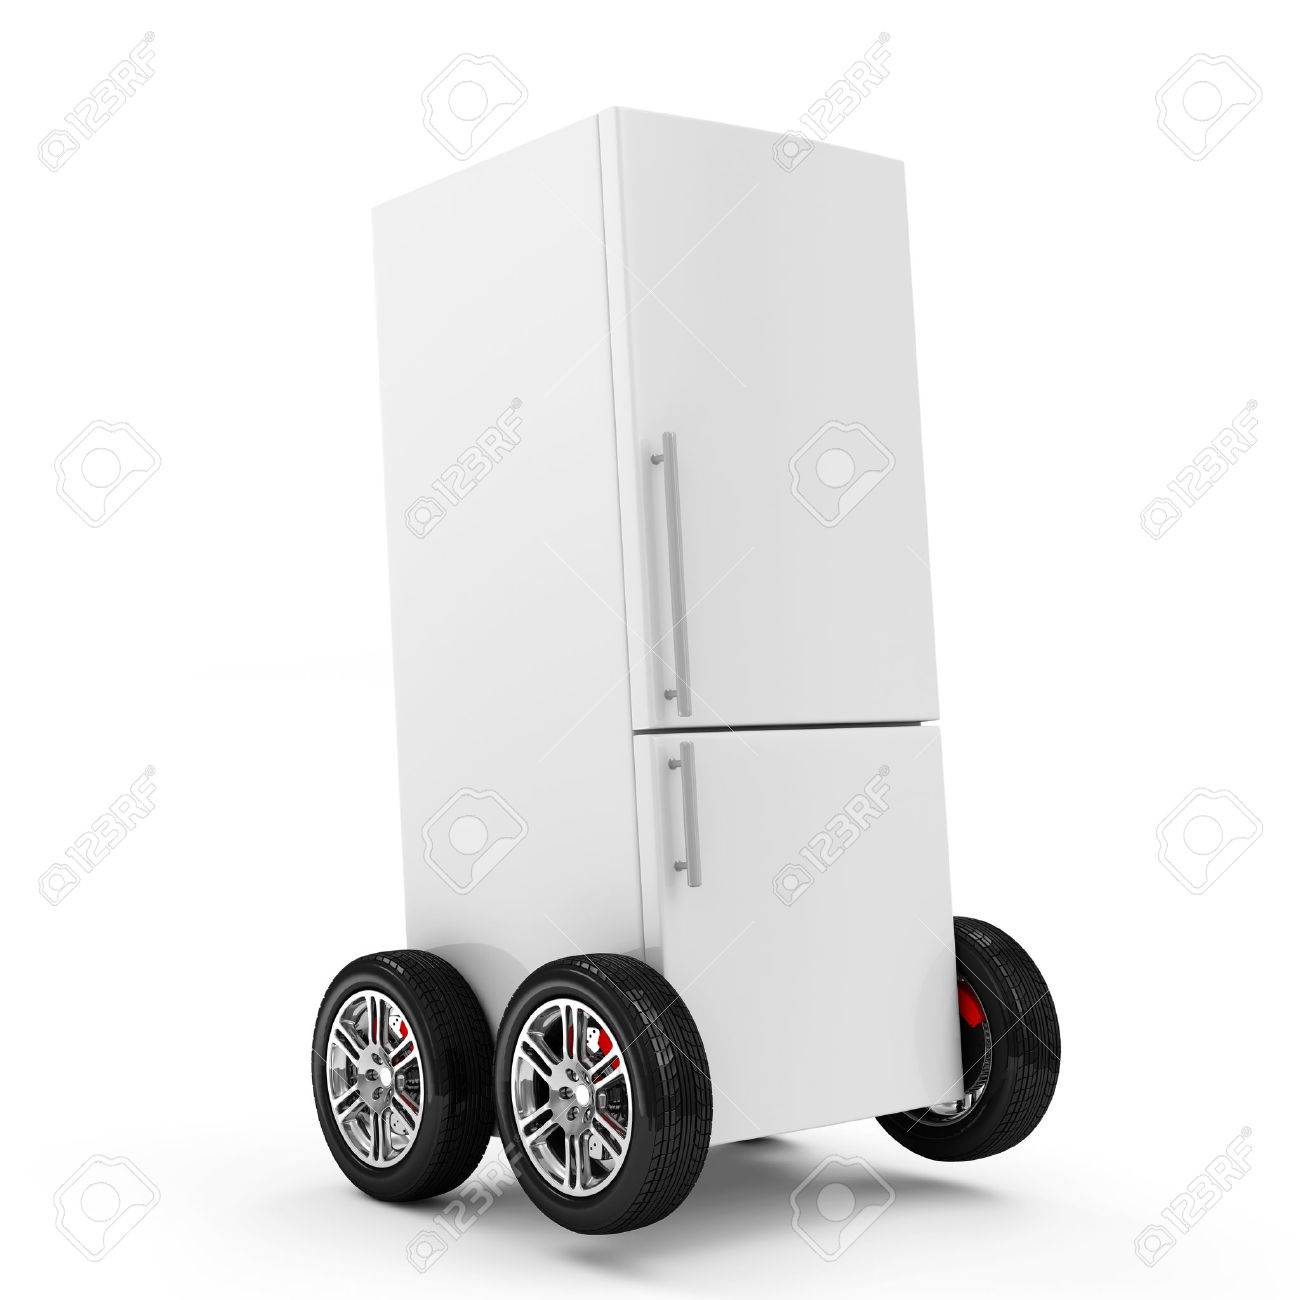 27227683-refrigerator-on-wheels-isolated-on-white-background.jpg